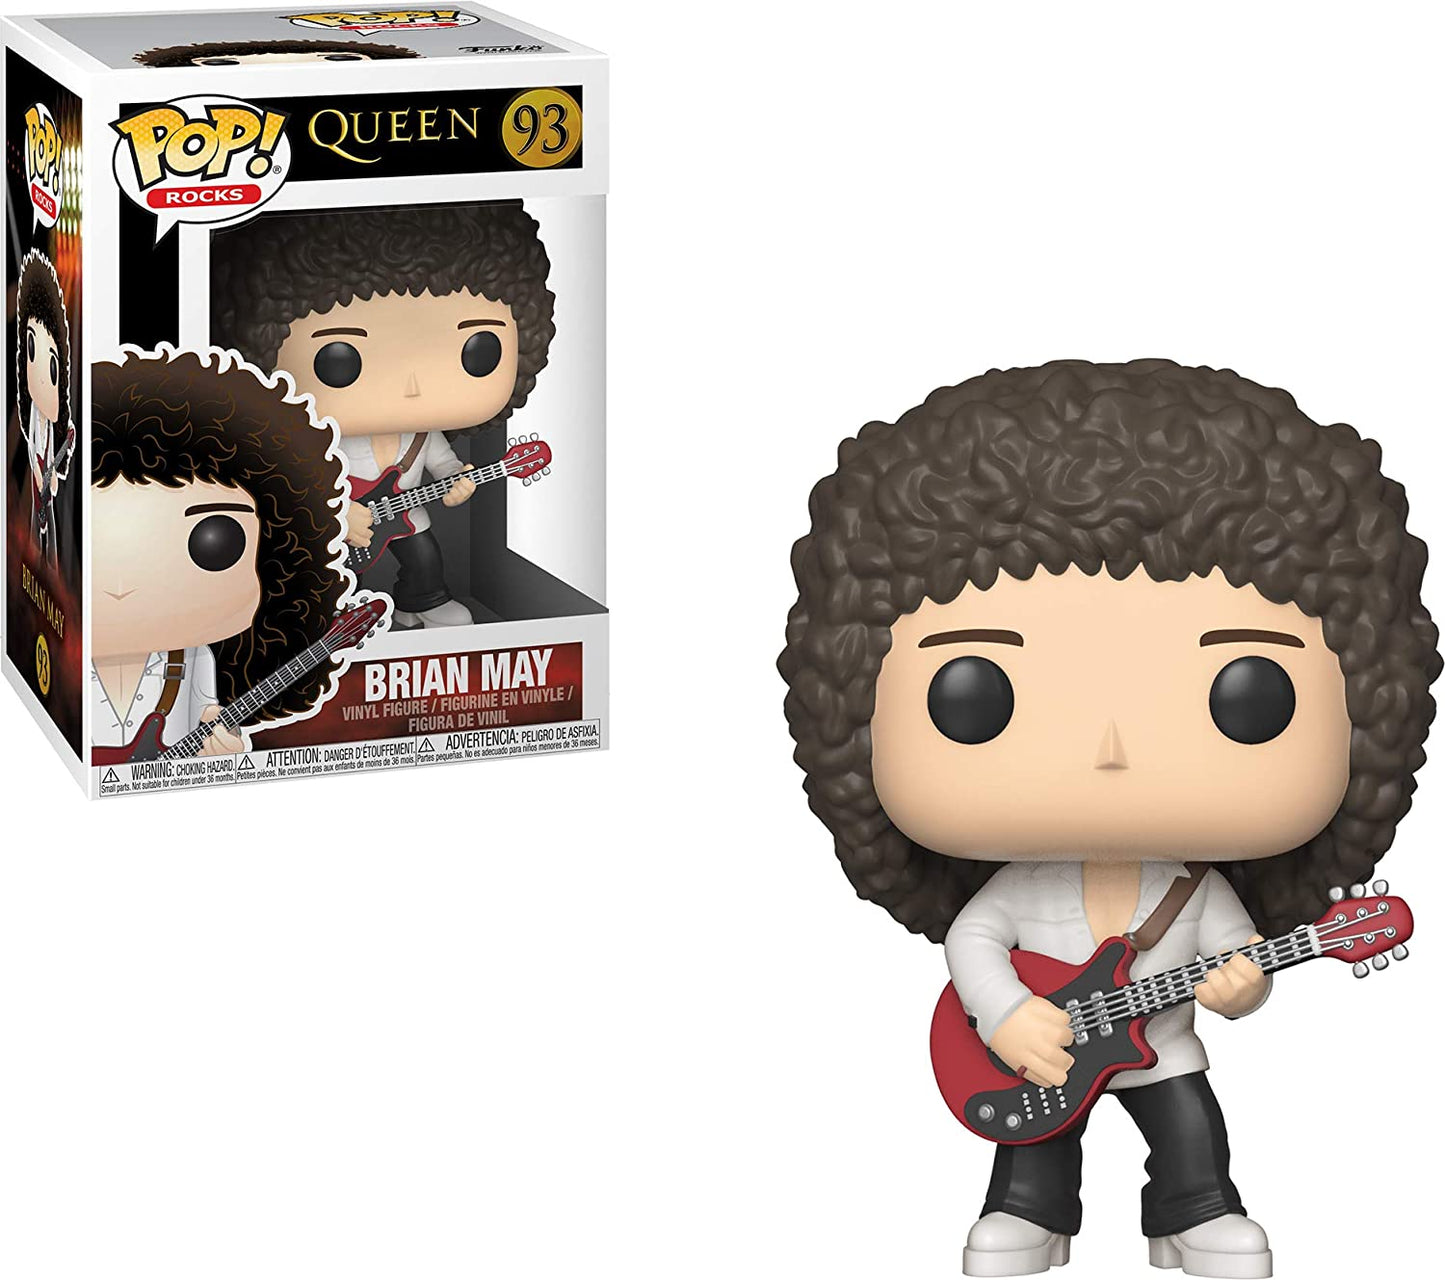 ROCKS 93 Funko Pop! - Queen - Brian May